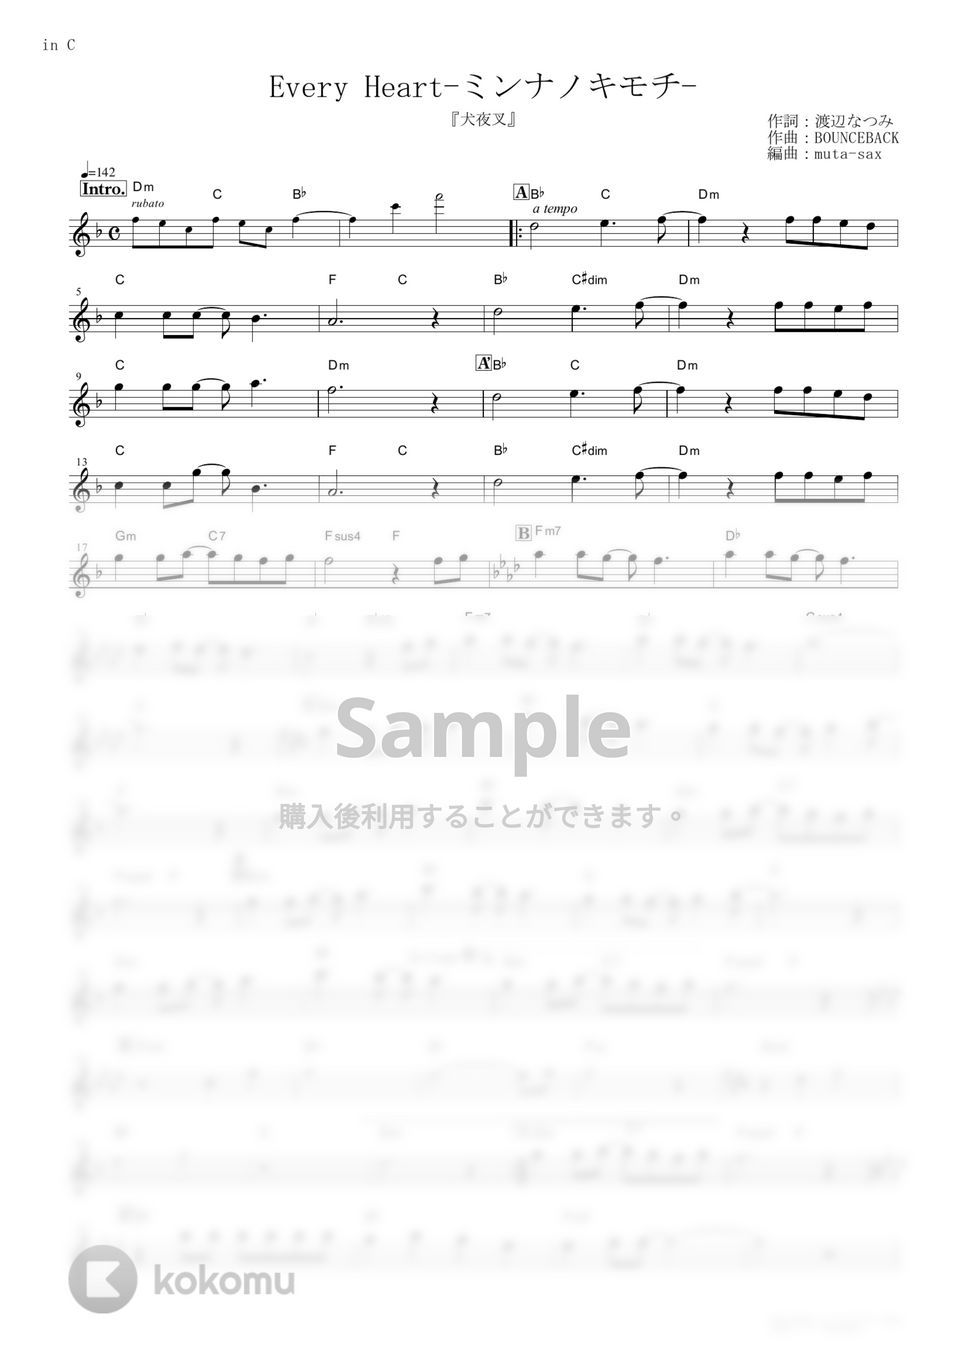 BoA - Every Heart-ミンナノキモチ- (『犬夜叉』 / in C) by muta-sax